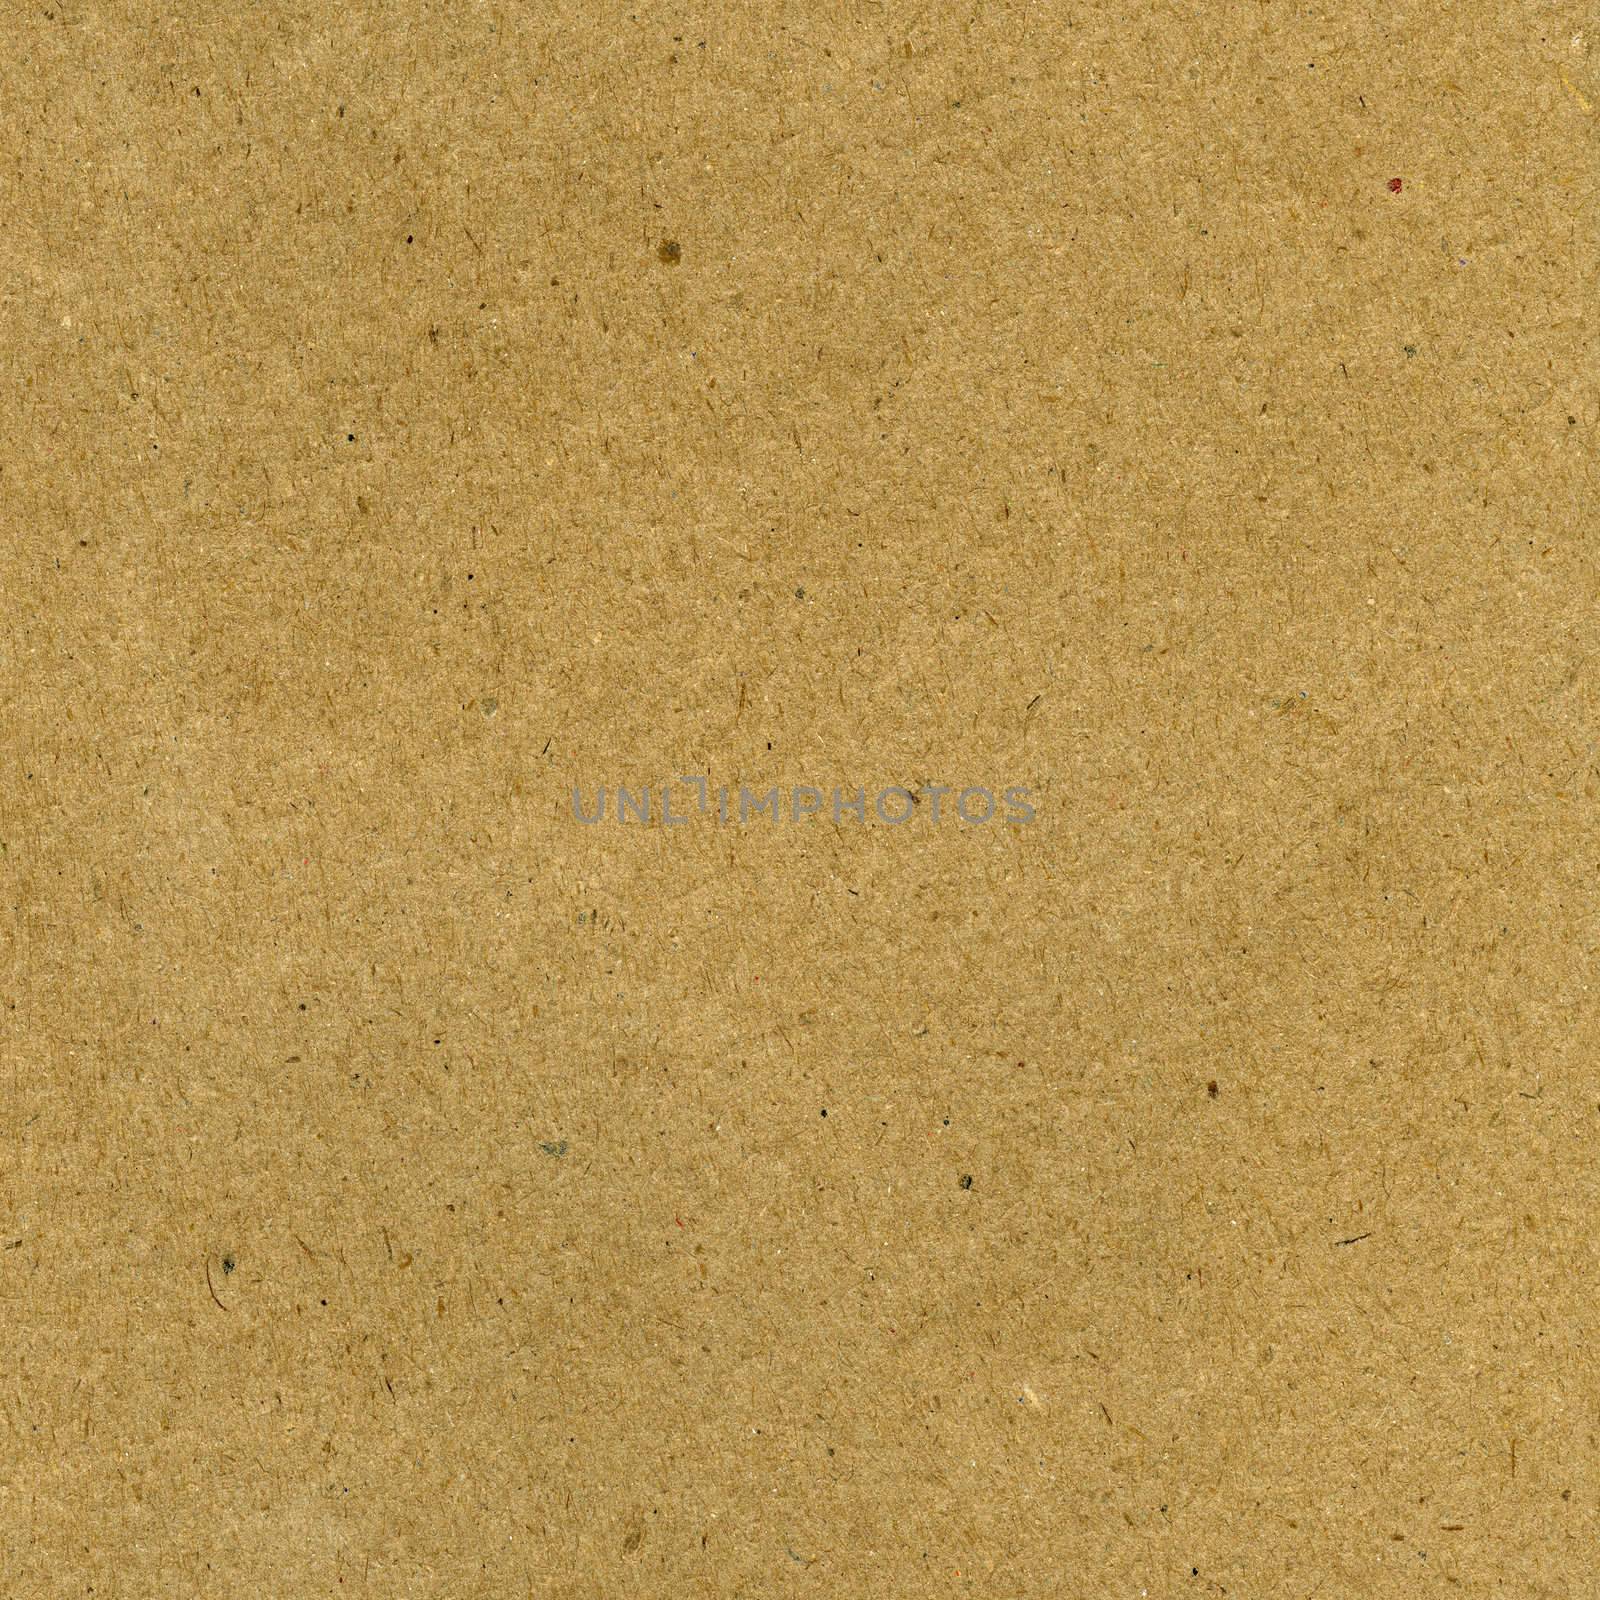 brown paper texture by PixelsAway